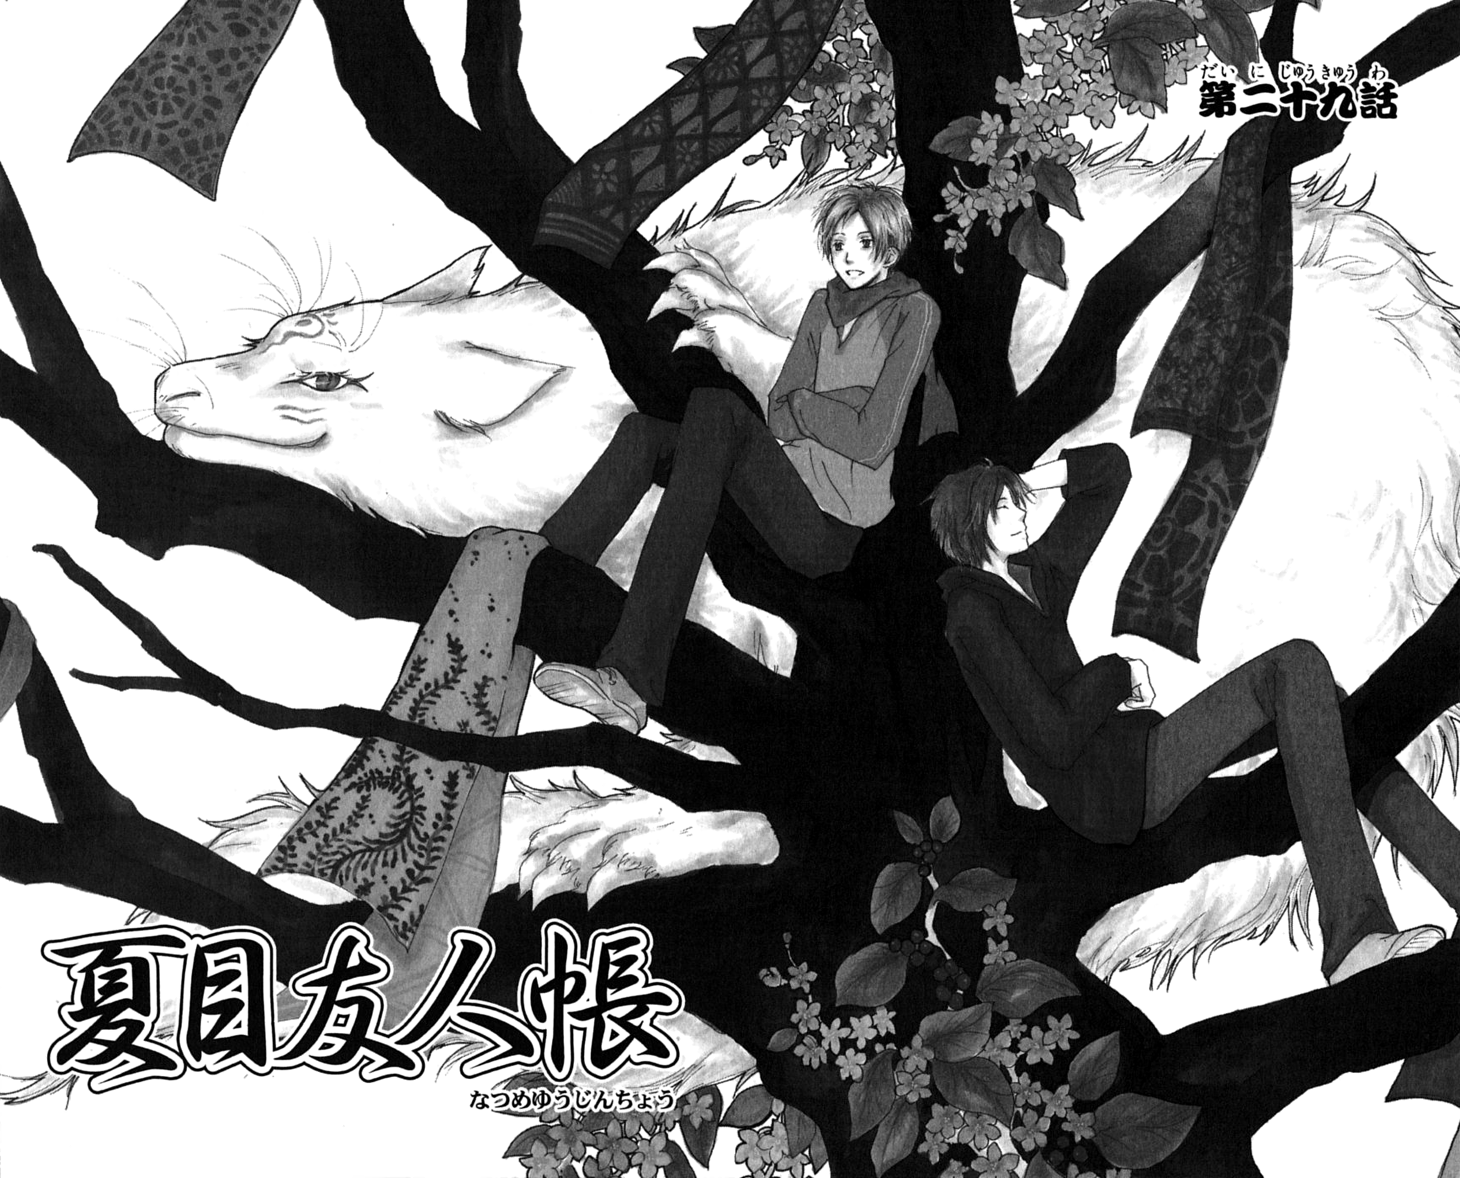 Natsume Yuujinchou Vol.8-Chapter.29-Chapter-29 Image